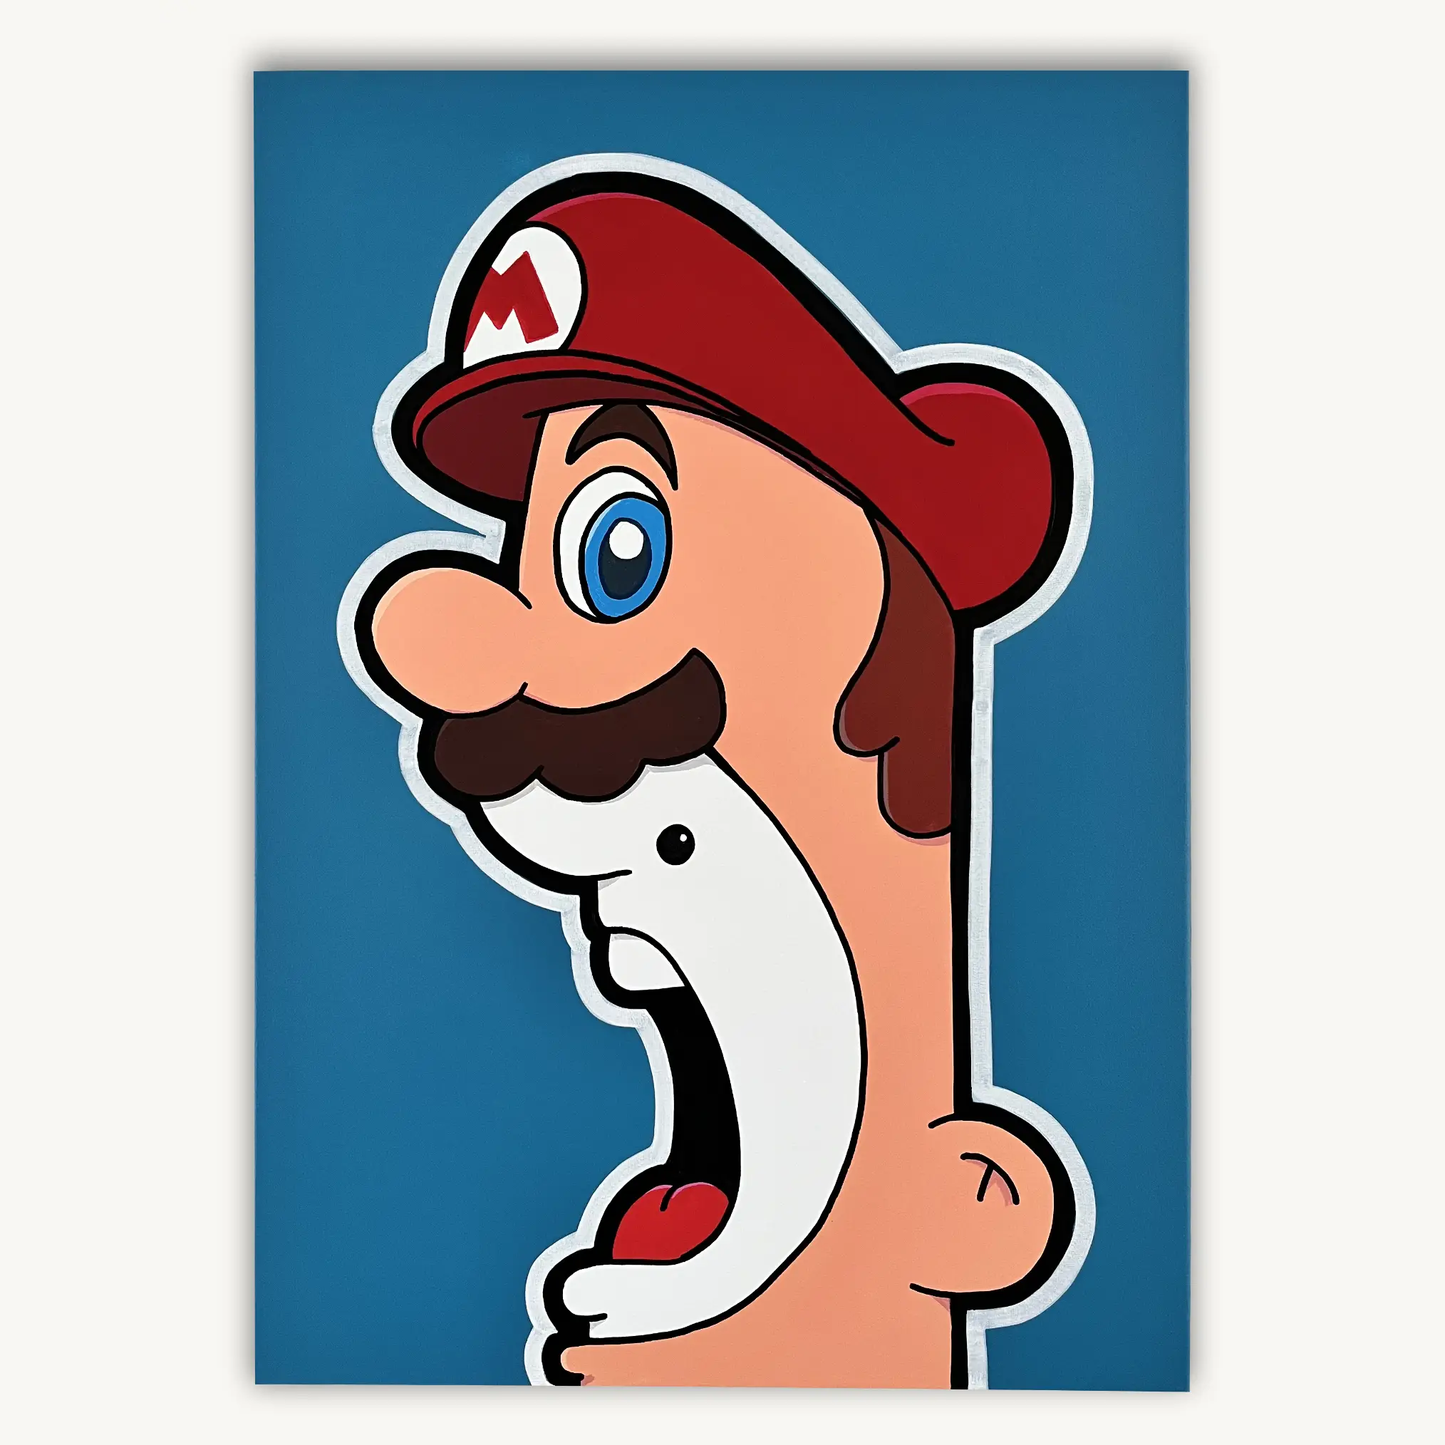 Shouter vs Mario painting